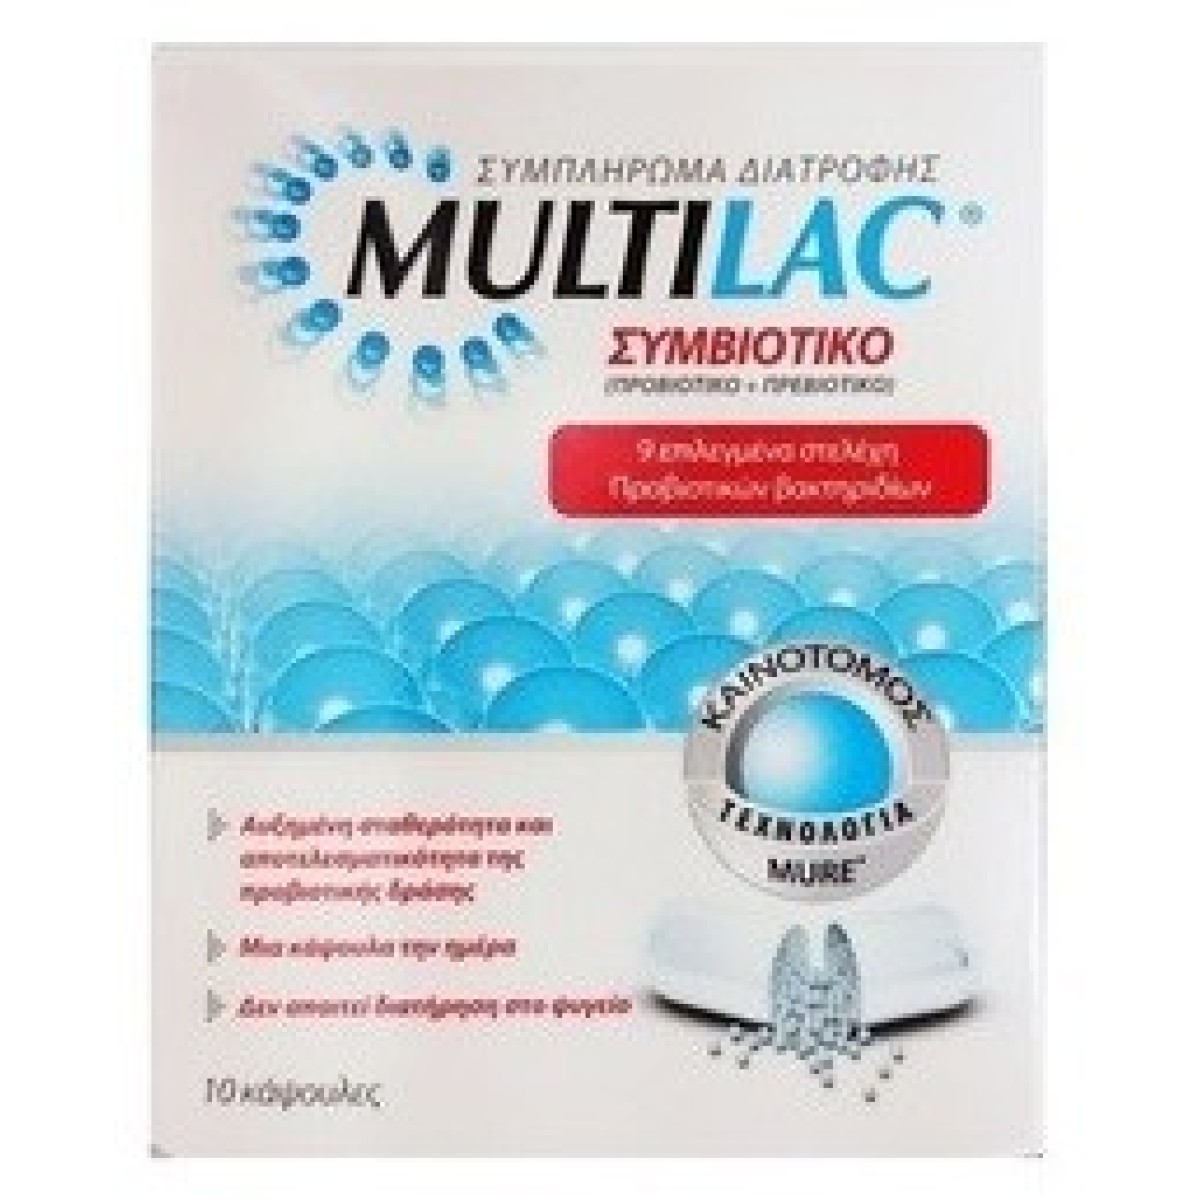 PharmaSwiss | Multilac | Συμβιοτικό - Προβιοτικό & Πρεβιοτικό |10caps